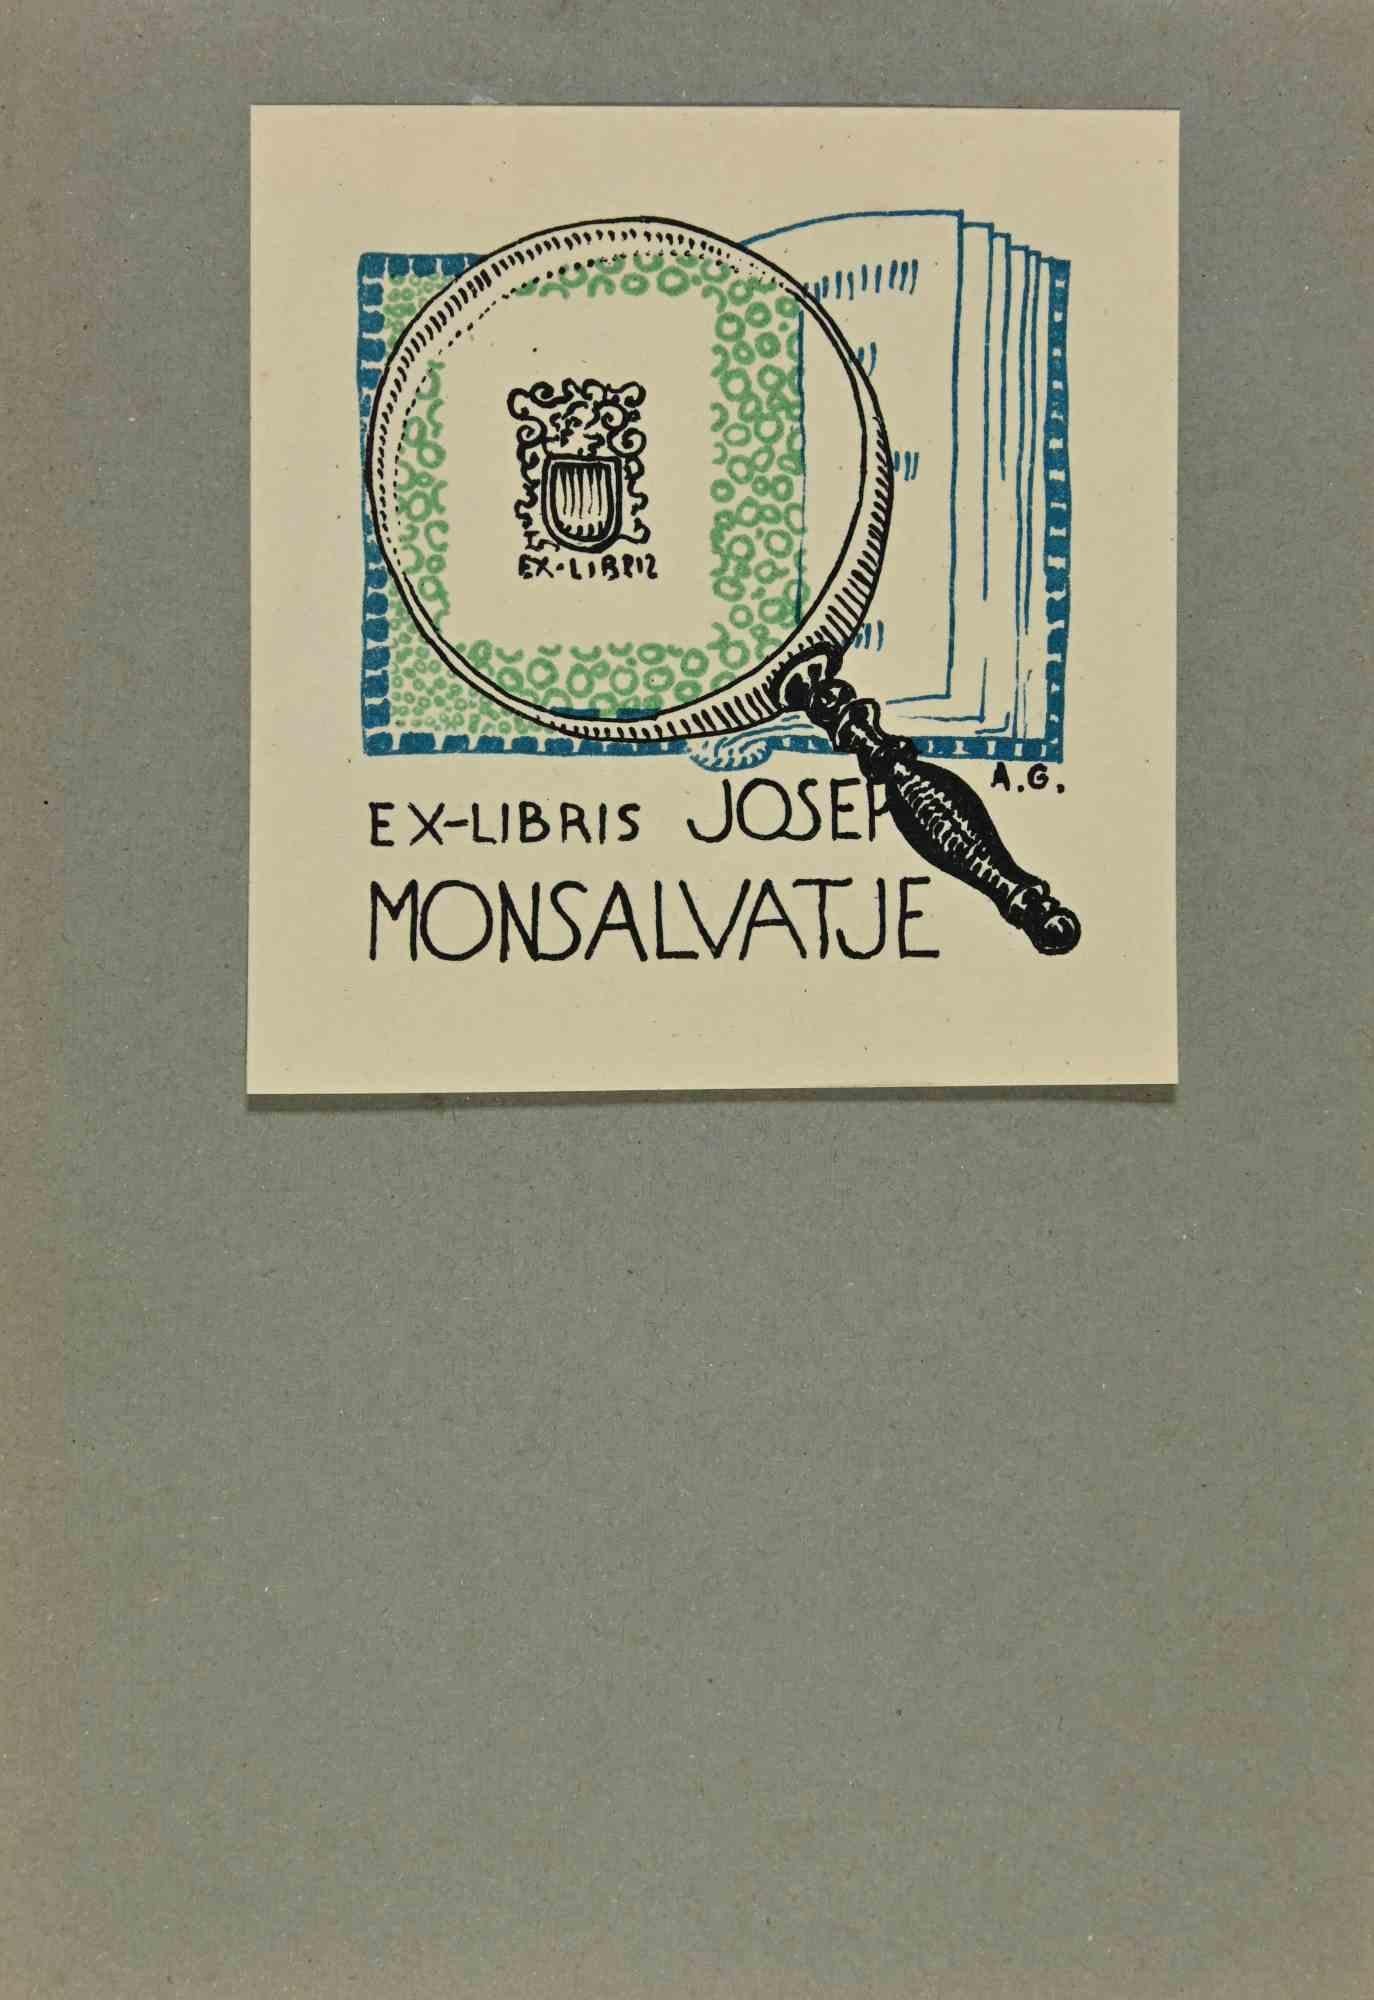  Ex Libris - Josep Monsalvatje - Woodcut - Early 20th Century